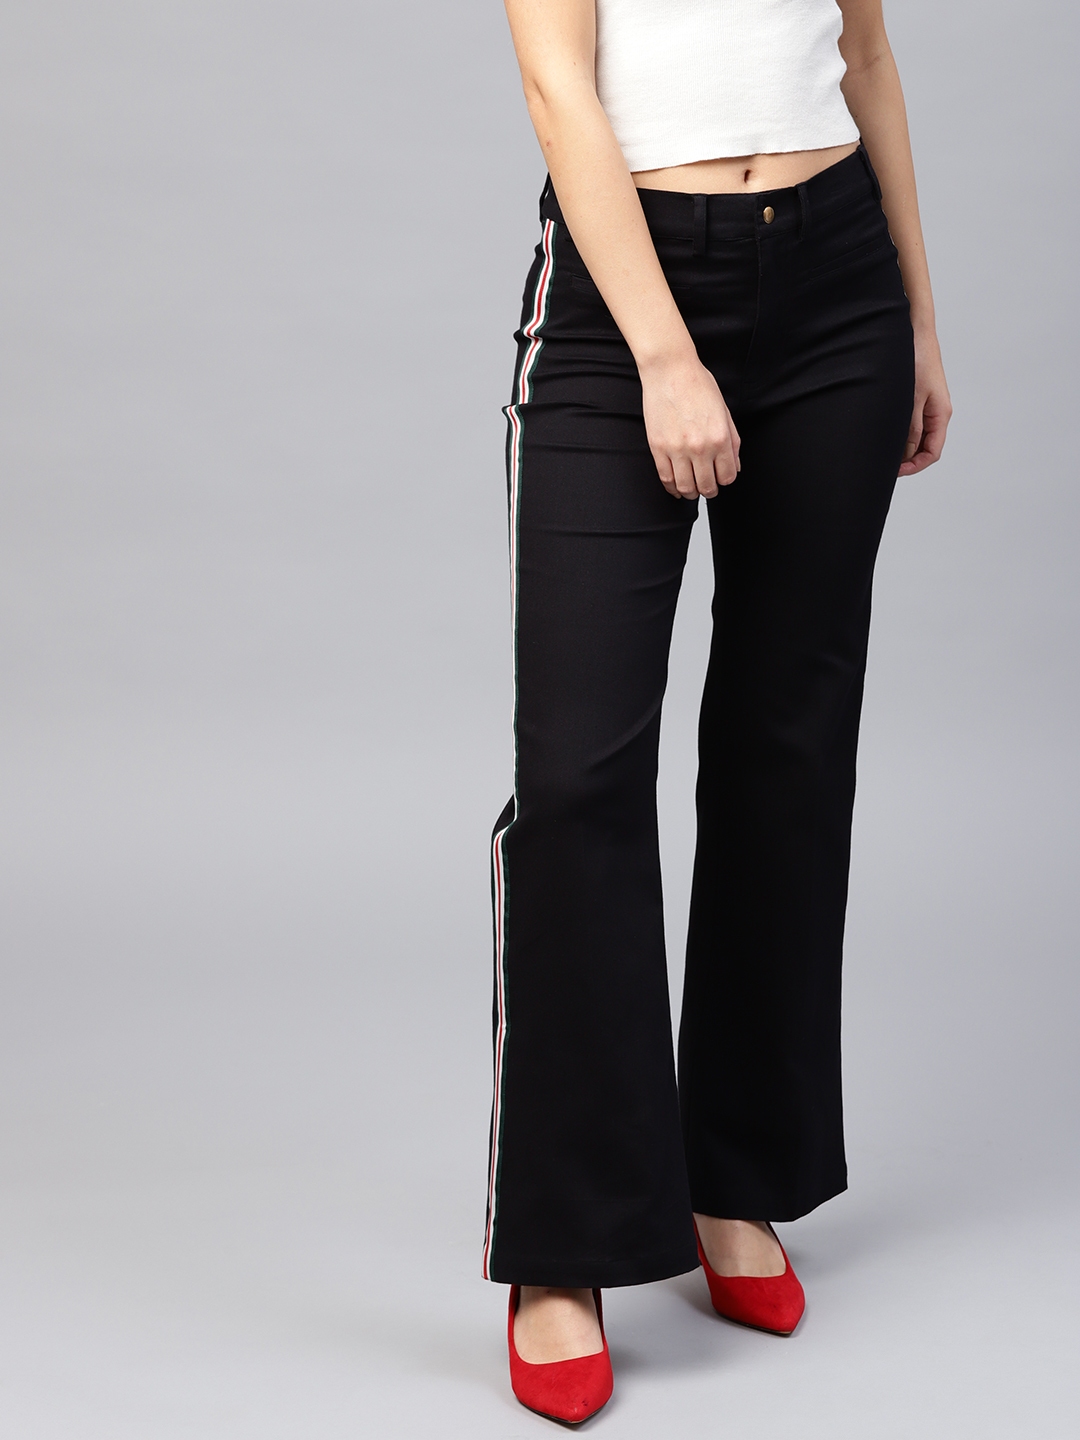 Buy Women Black Regular Fit Solid Casual Trousers Online  255248  Allen  Solly